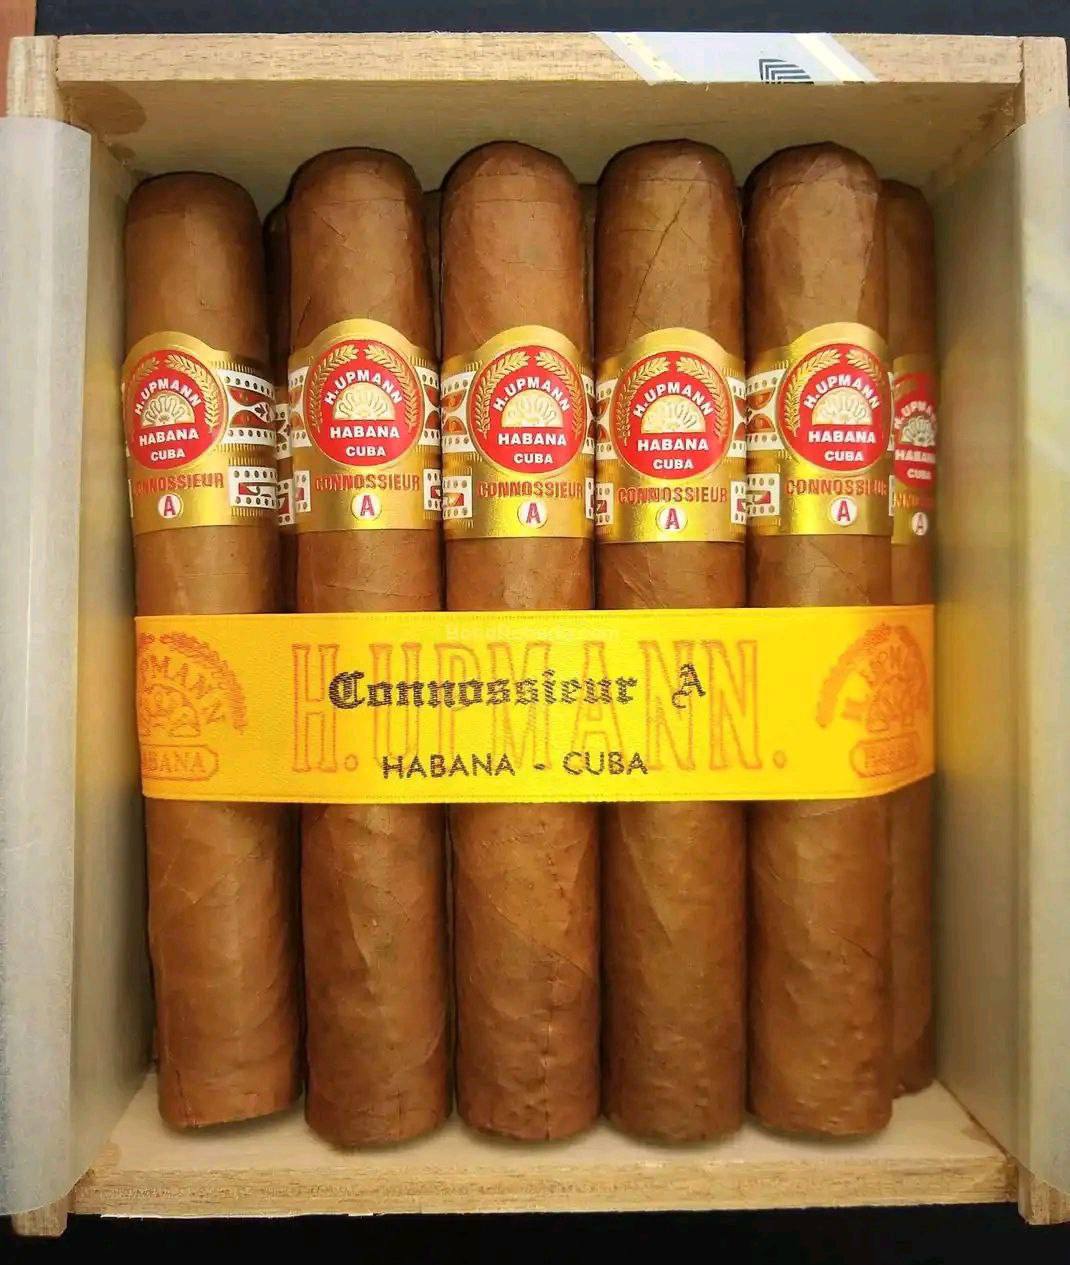 H.upmann Connossieur A box of 25 cigars